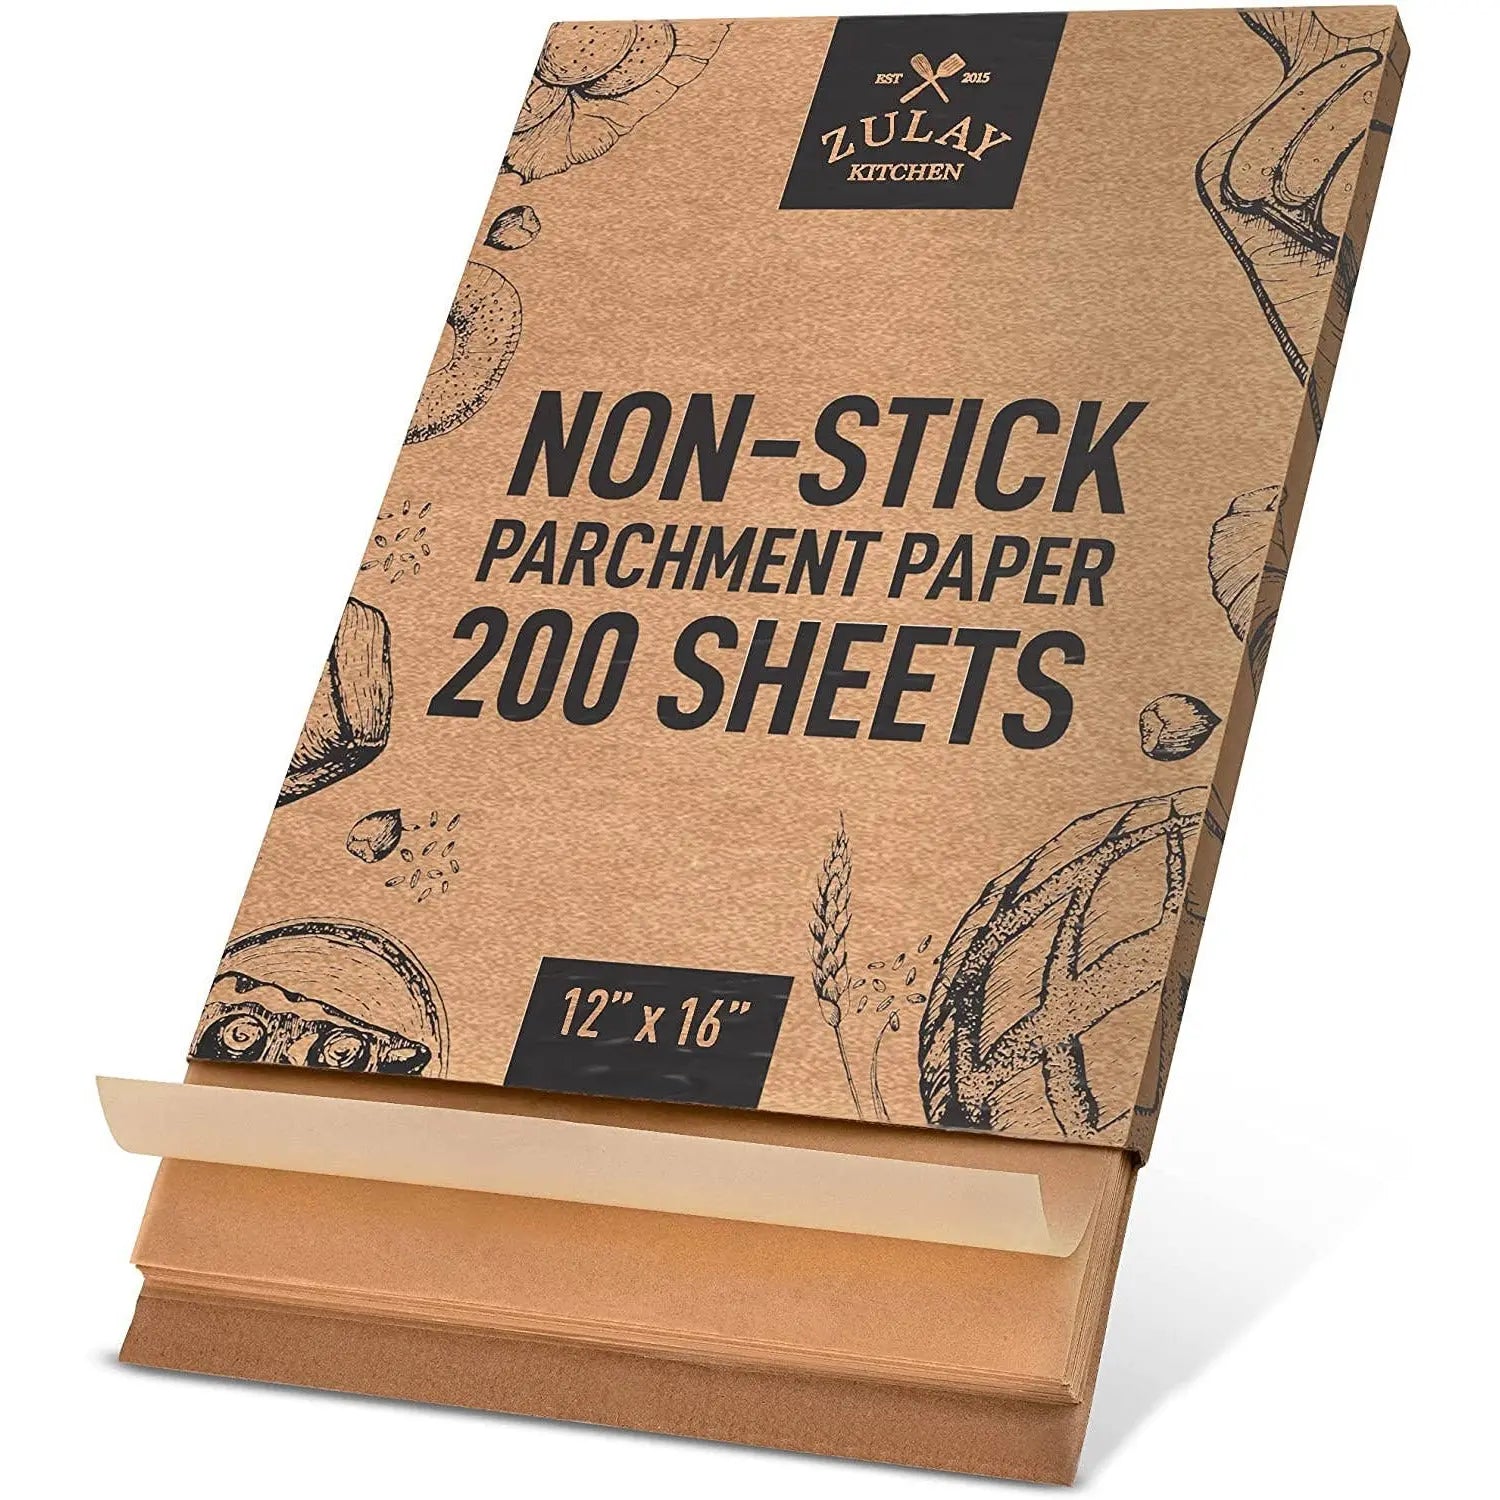 Zulay Kitchen 200 Pcs Parchment Paper Sheets - 12x16